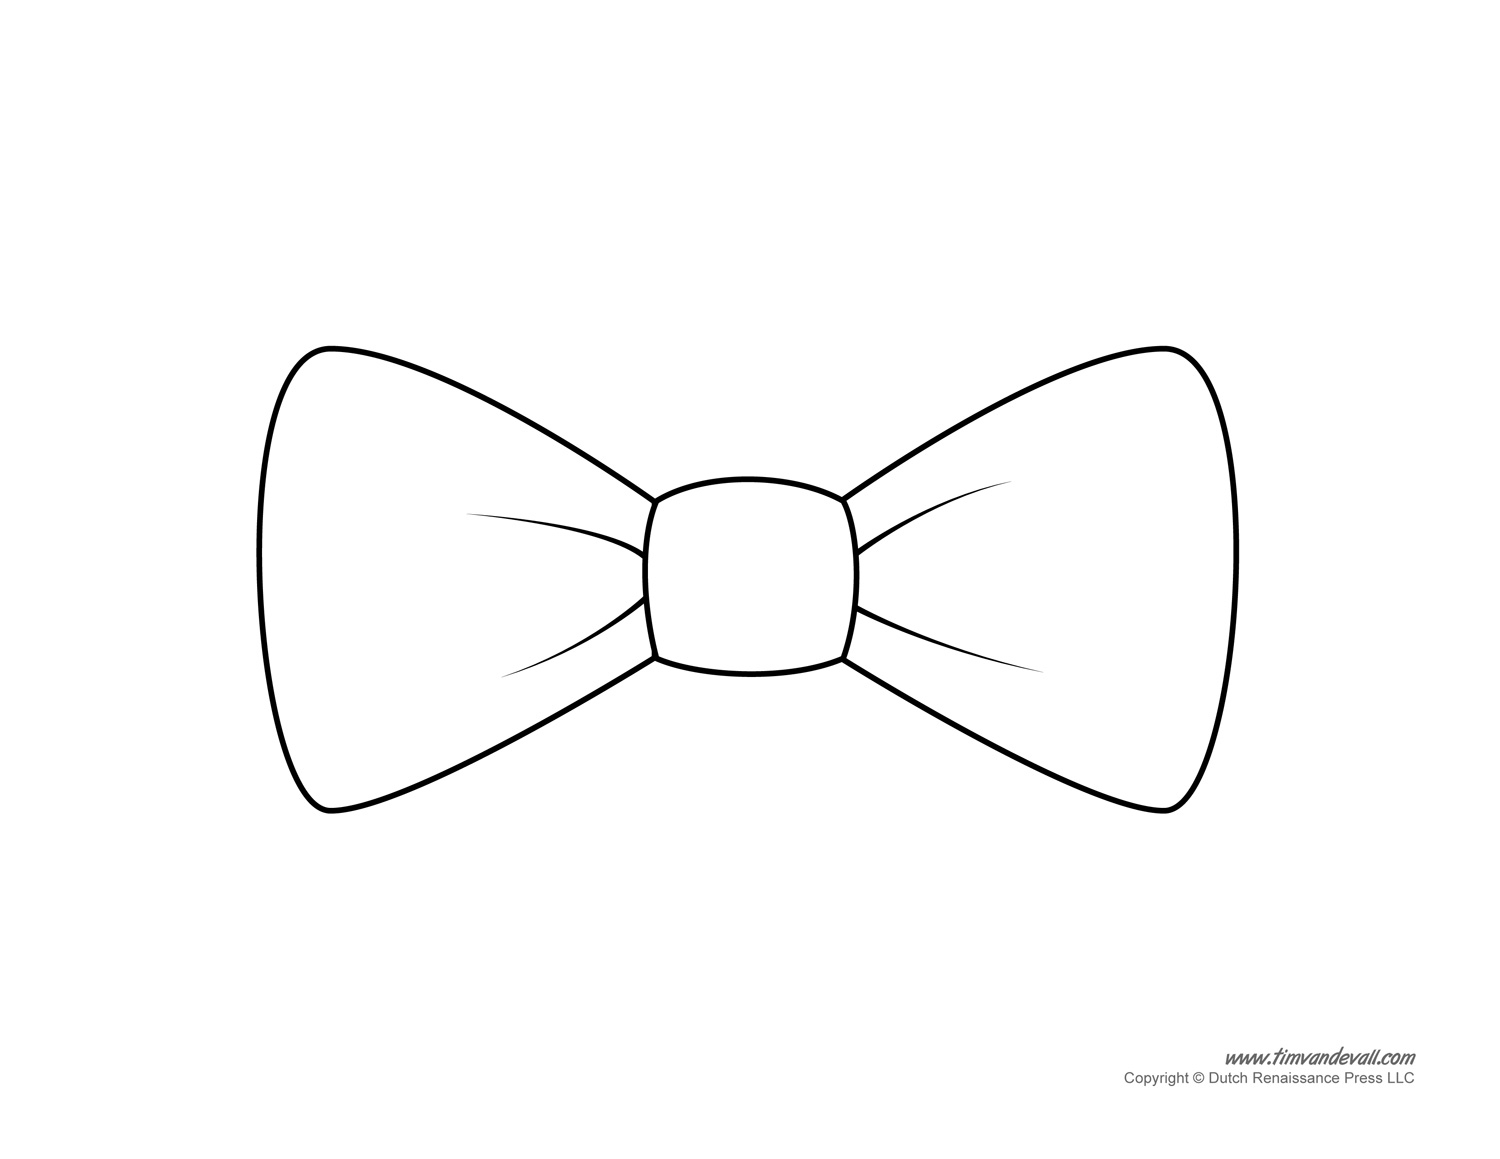 Paper Bow Tie Templates | Bow Tie Printables - Clip Art Library - Free Bow Tie Template Printable